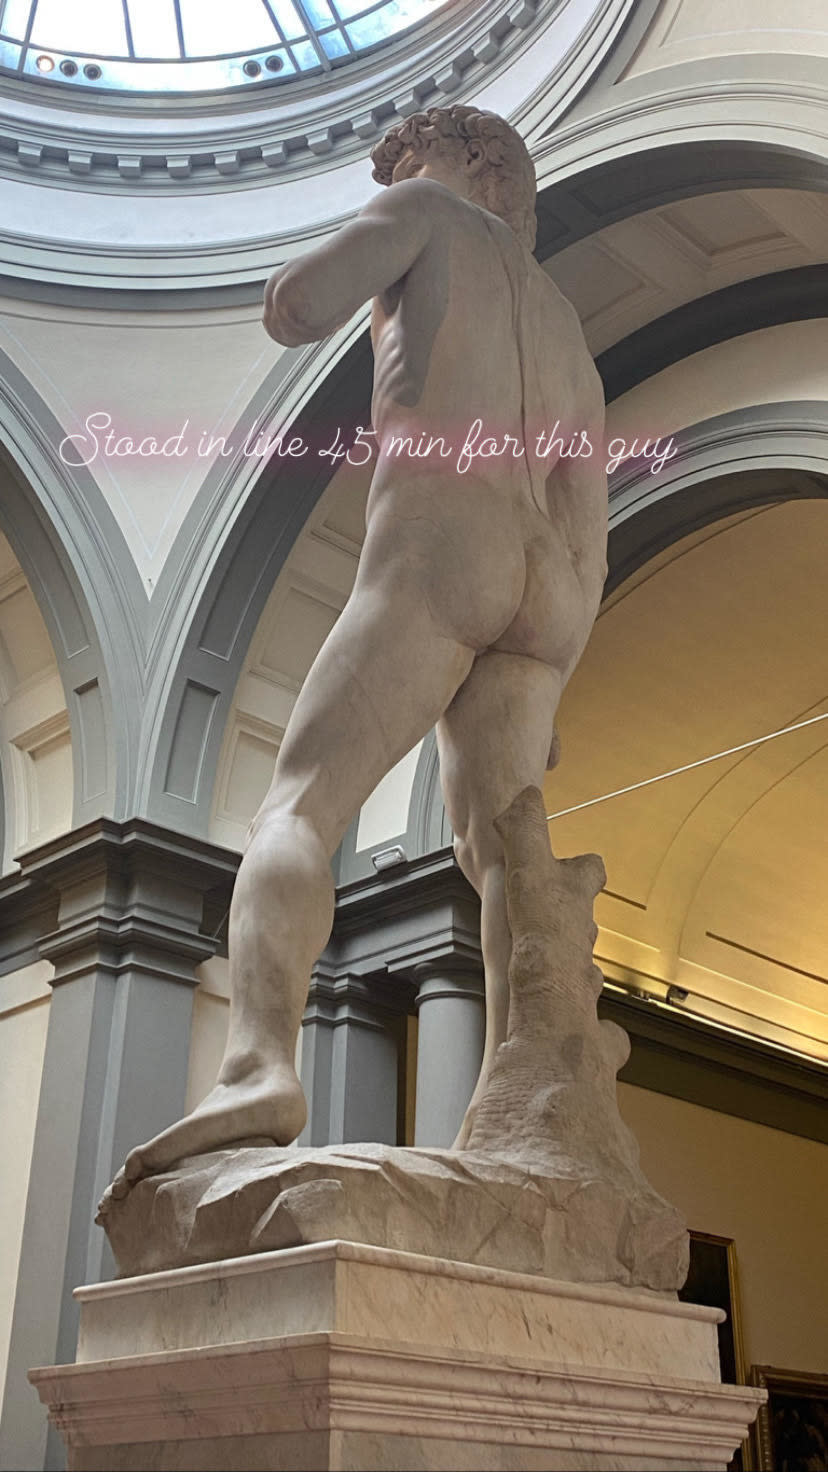 back view of Michelangelo's David statue